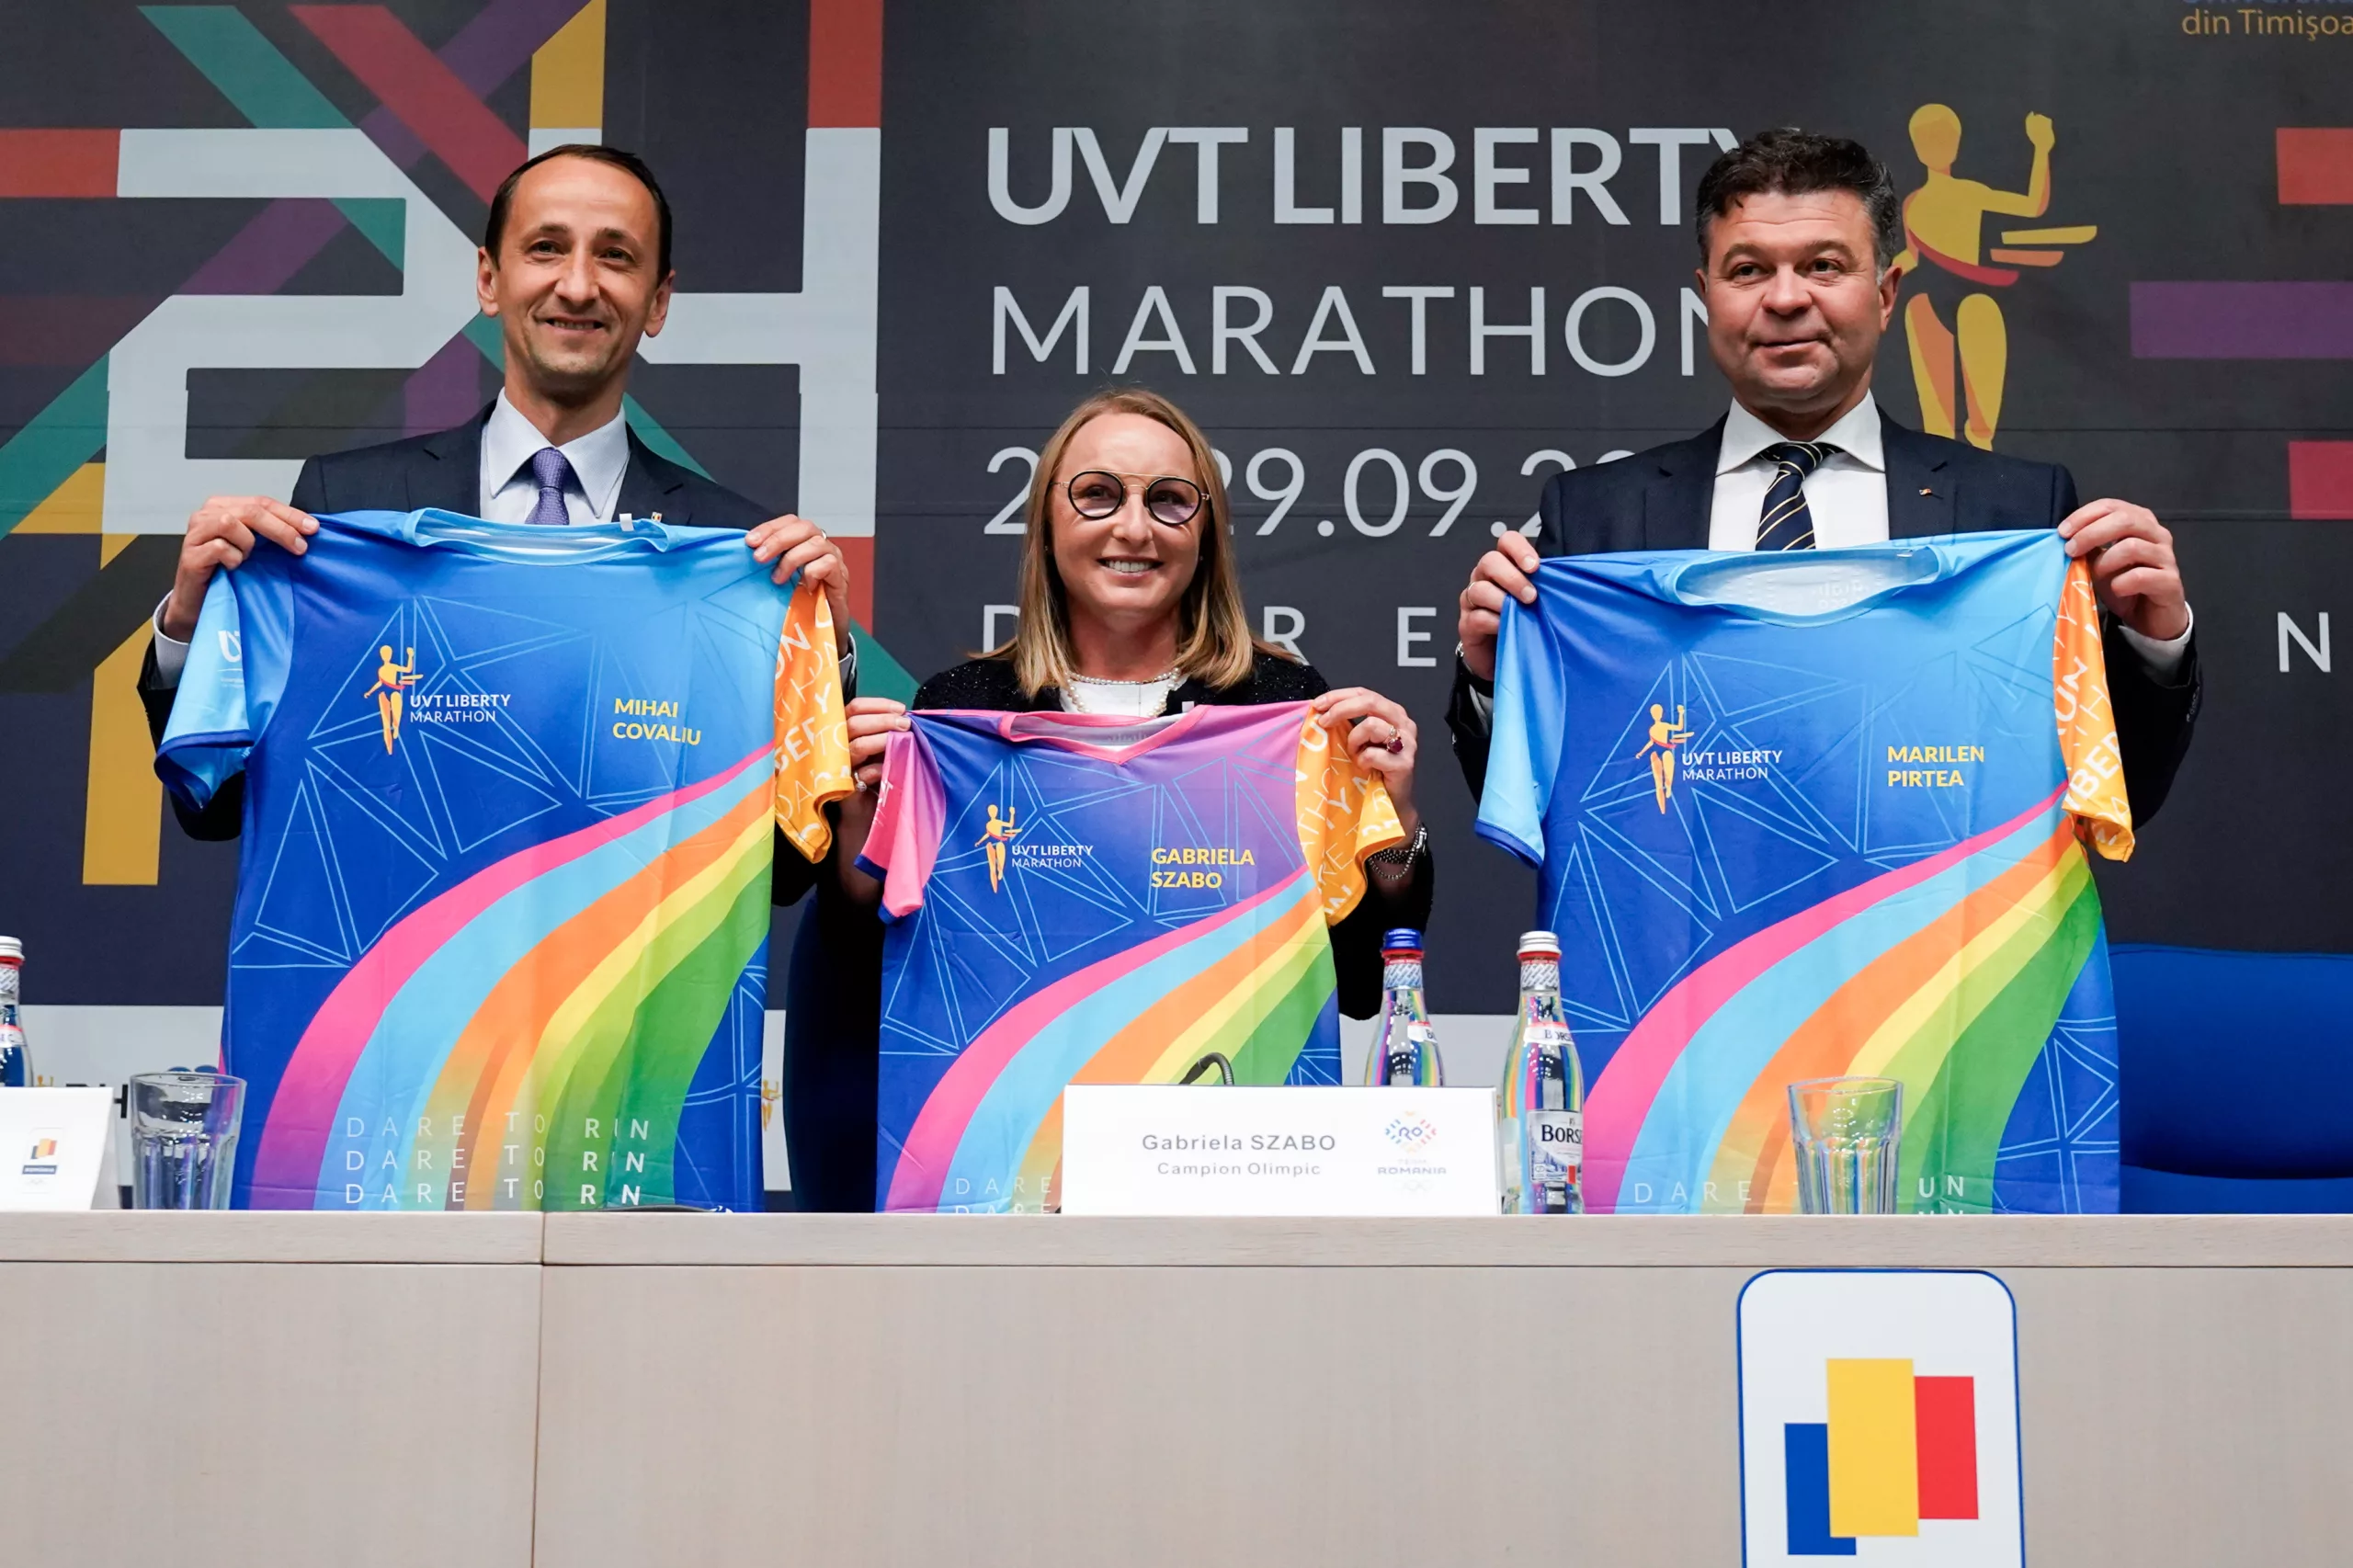 Gabriela Szabo, ambasadoarea ediției din acest an a UVT Liberty Marathon